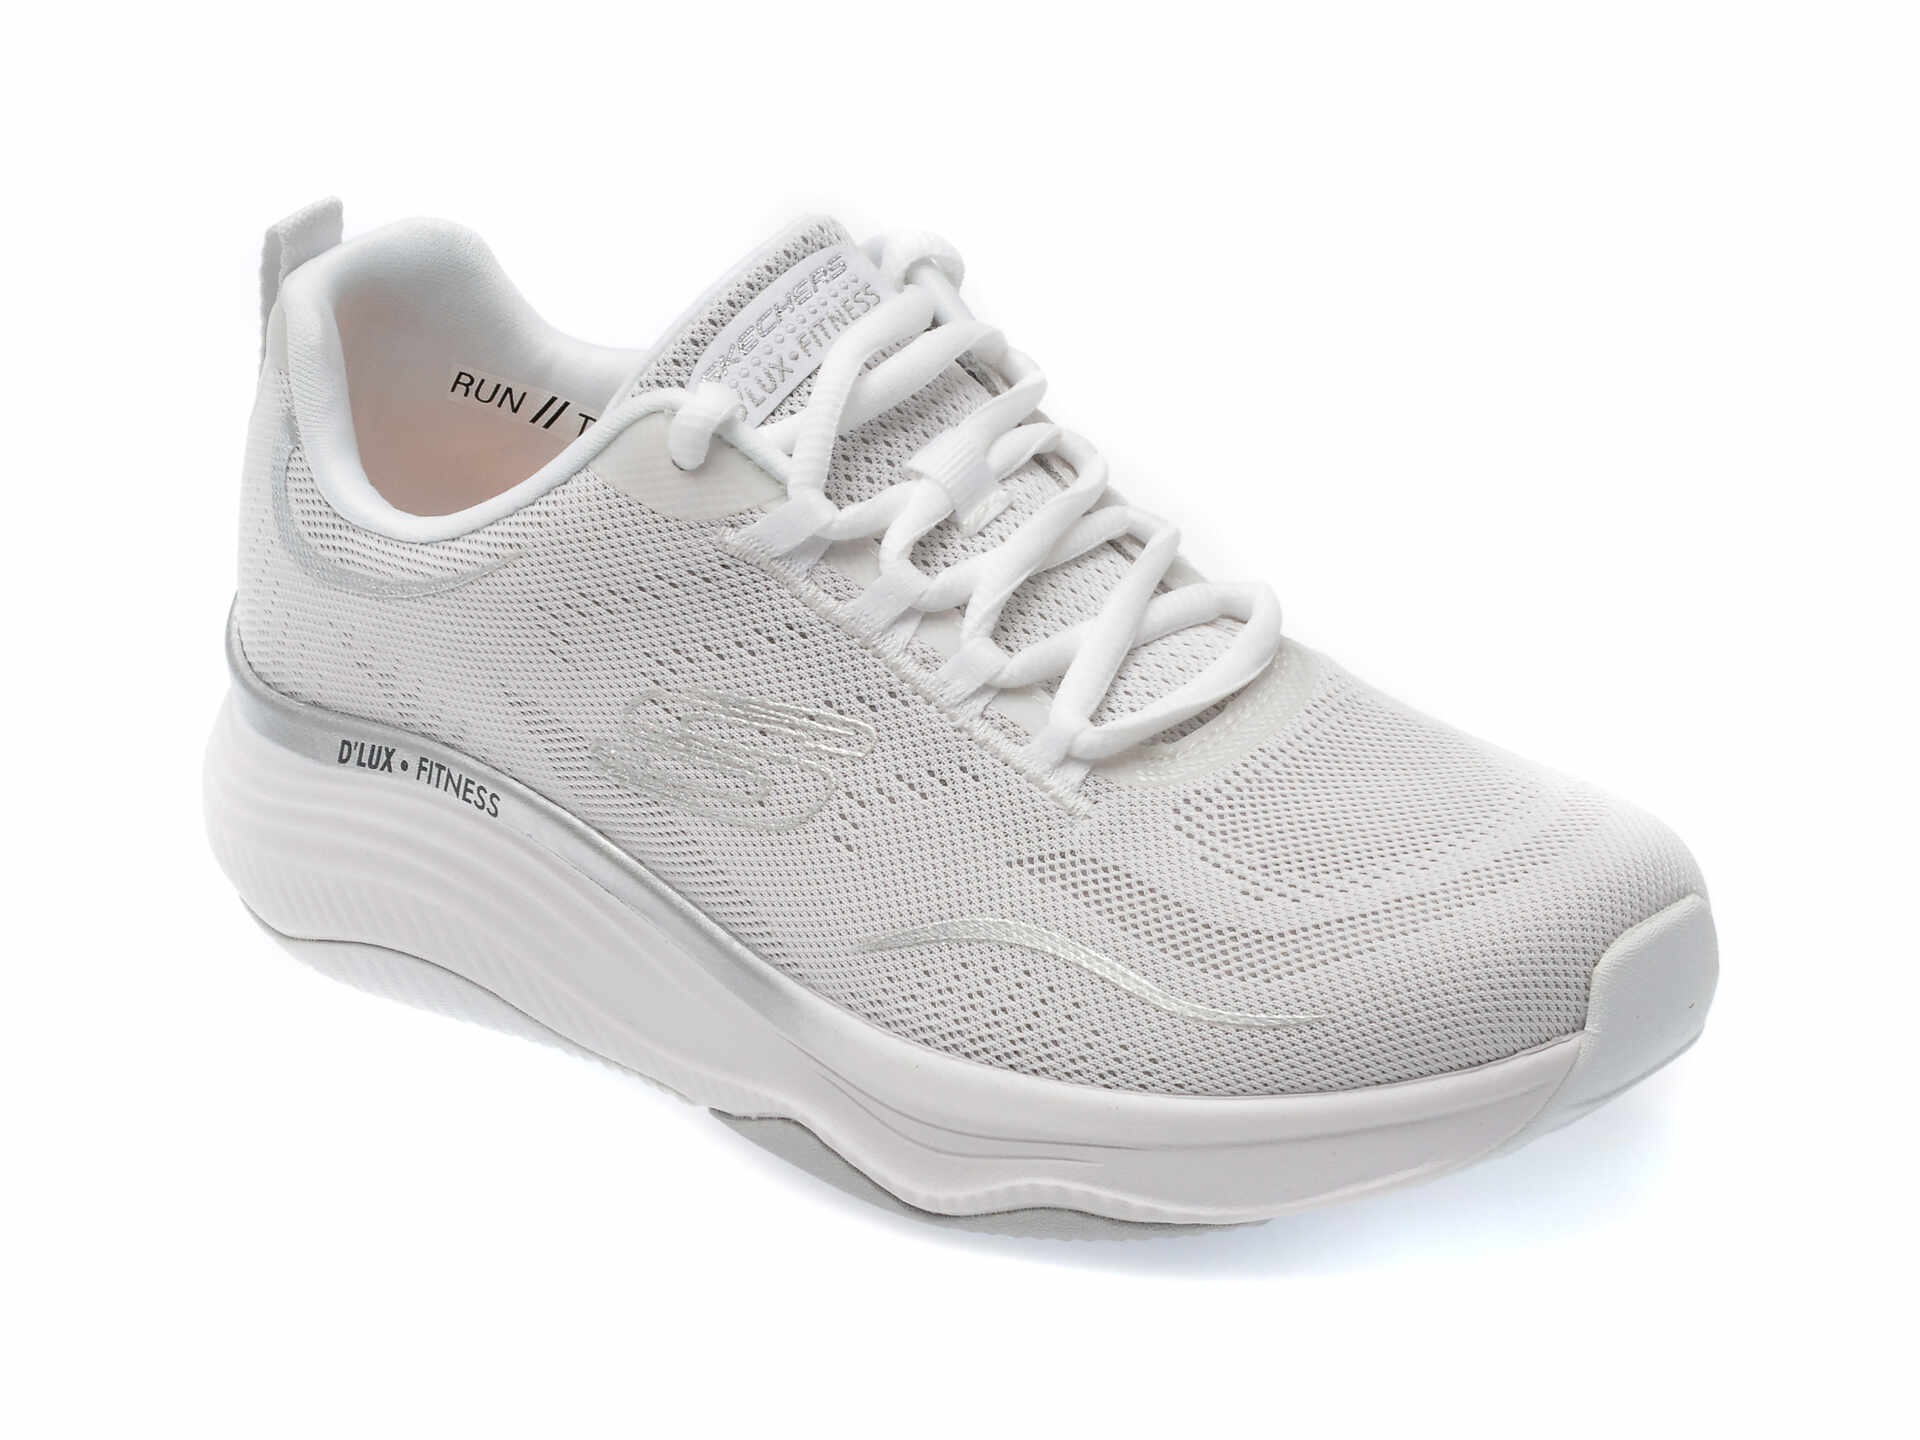 Pantofi SKECHERS albi, D LUX FITNESS, din material textil